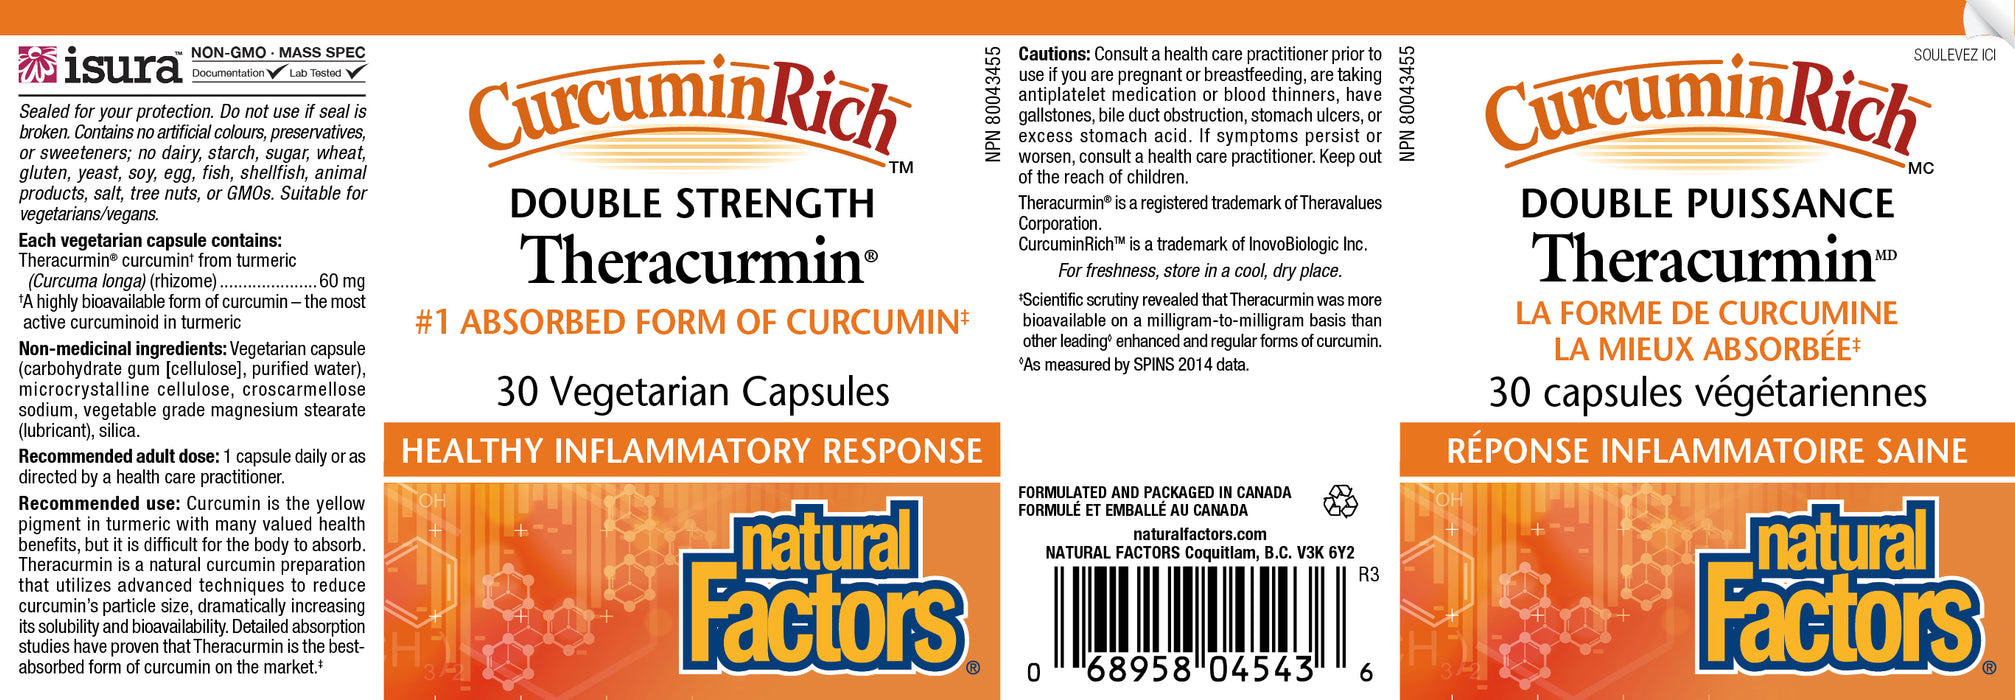 Natural Factors CurcuminRich Theracurmin Double Strength 30 Veg Capsules